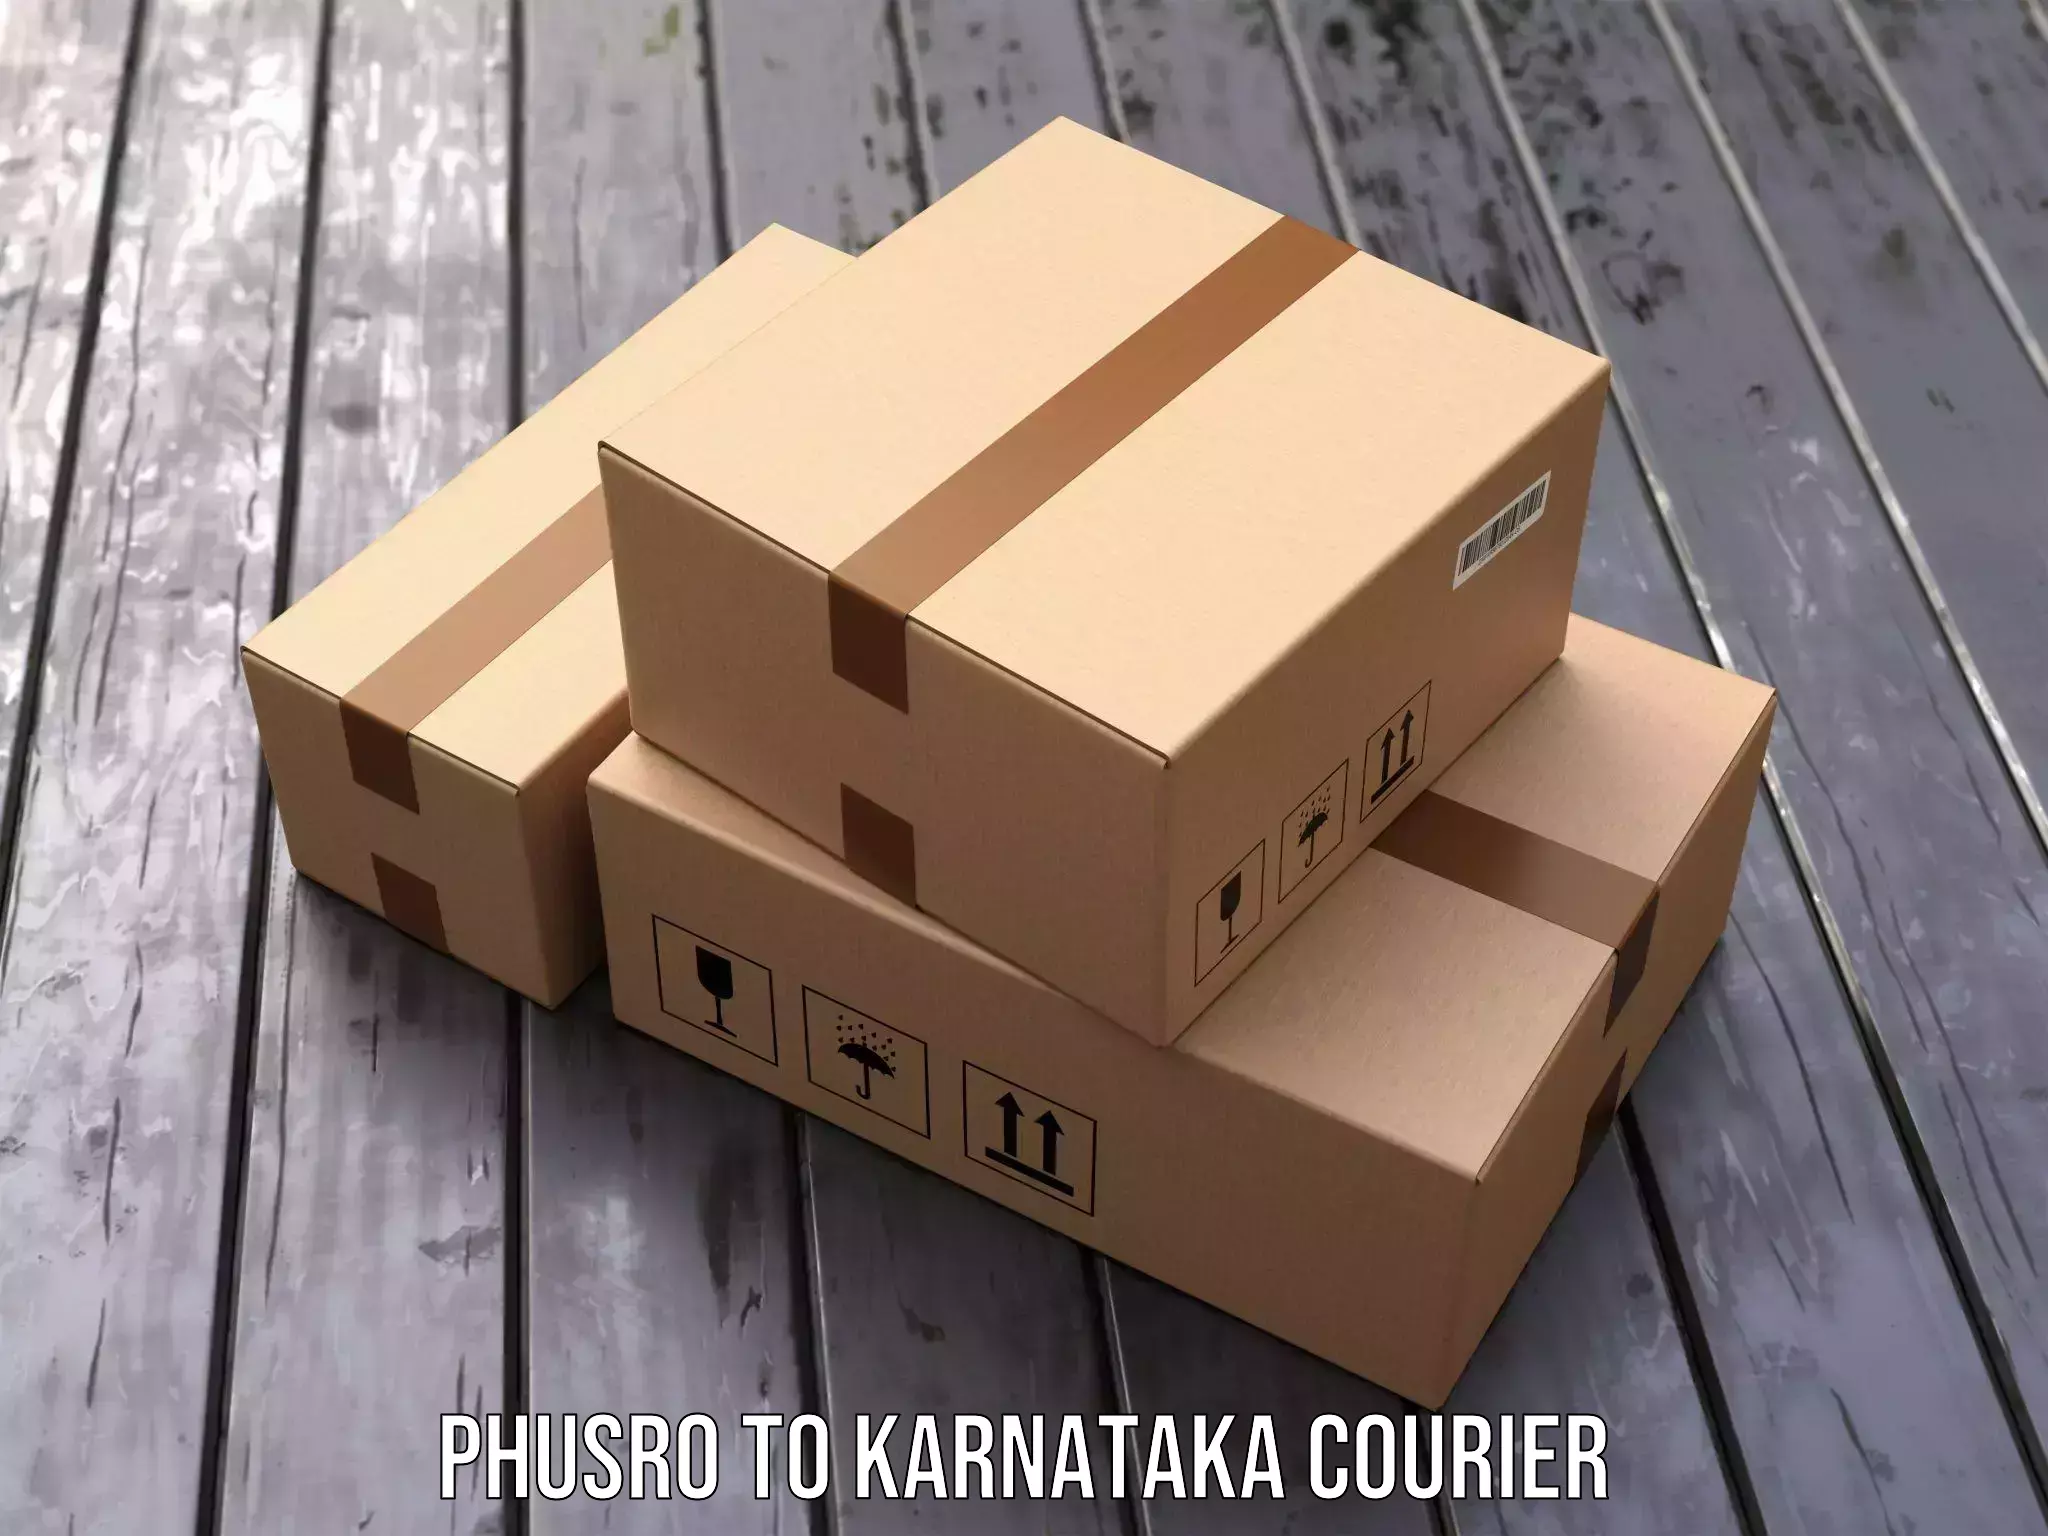 Cash on delivery service Phusro to Karnataka